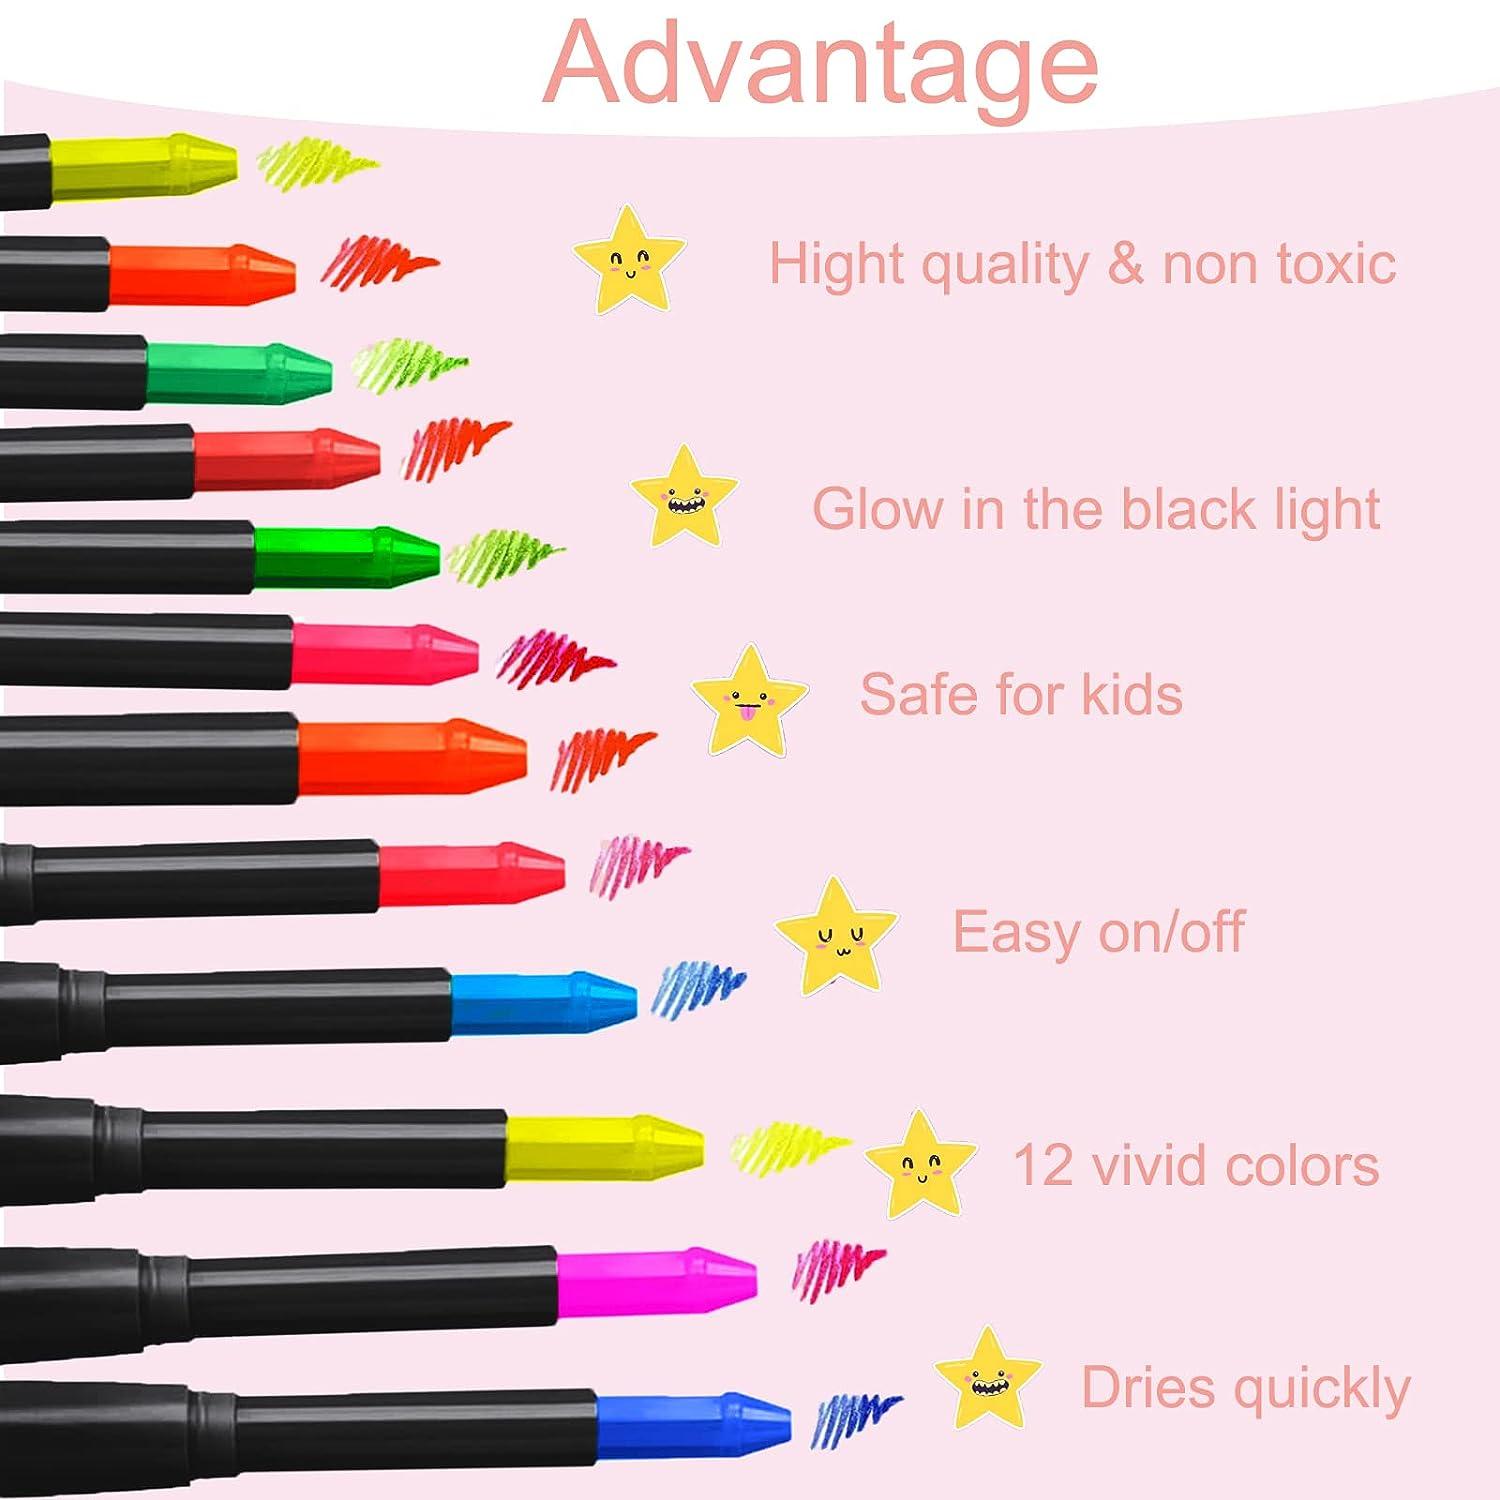 Brush Pen Adventure Pack - Face Paint Pens Pack